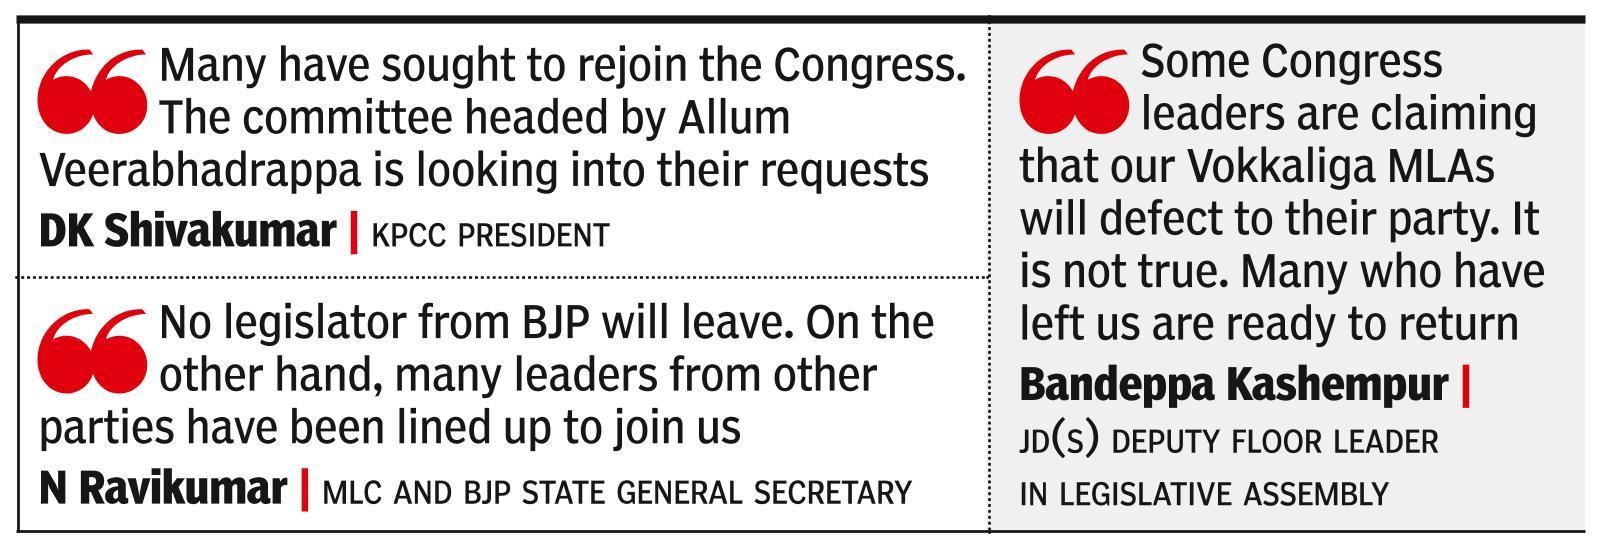 Cabinet reshuffle may trigger political churning